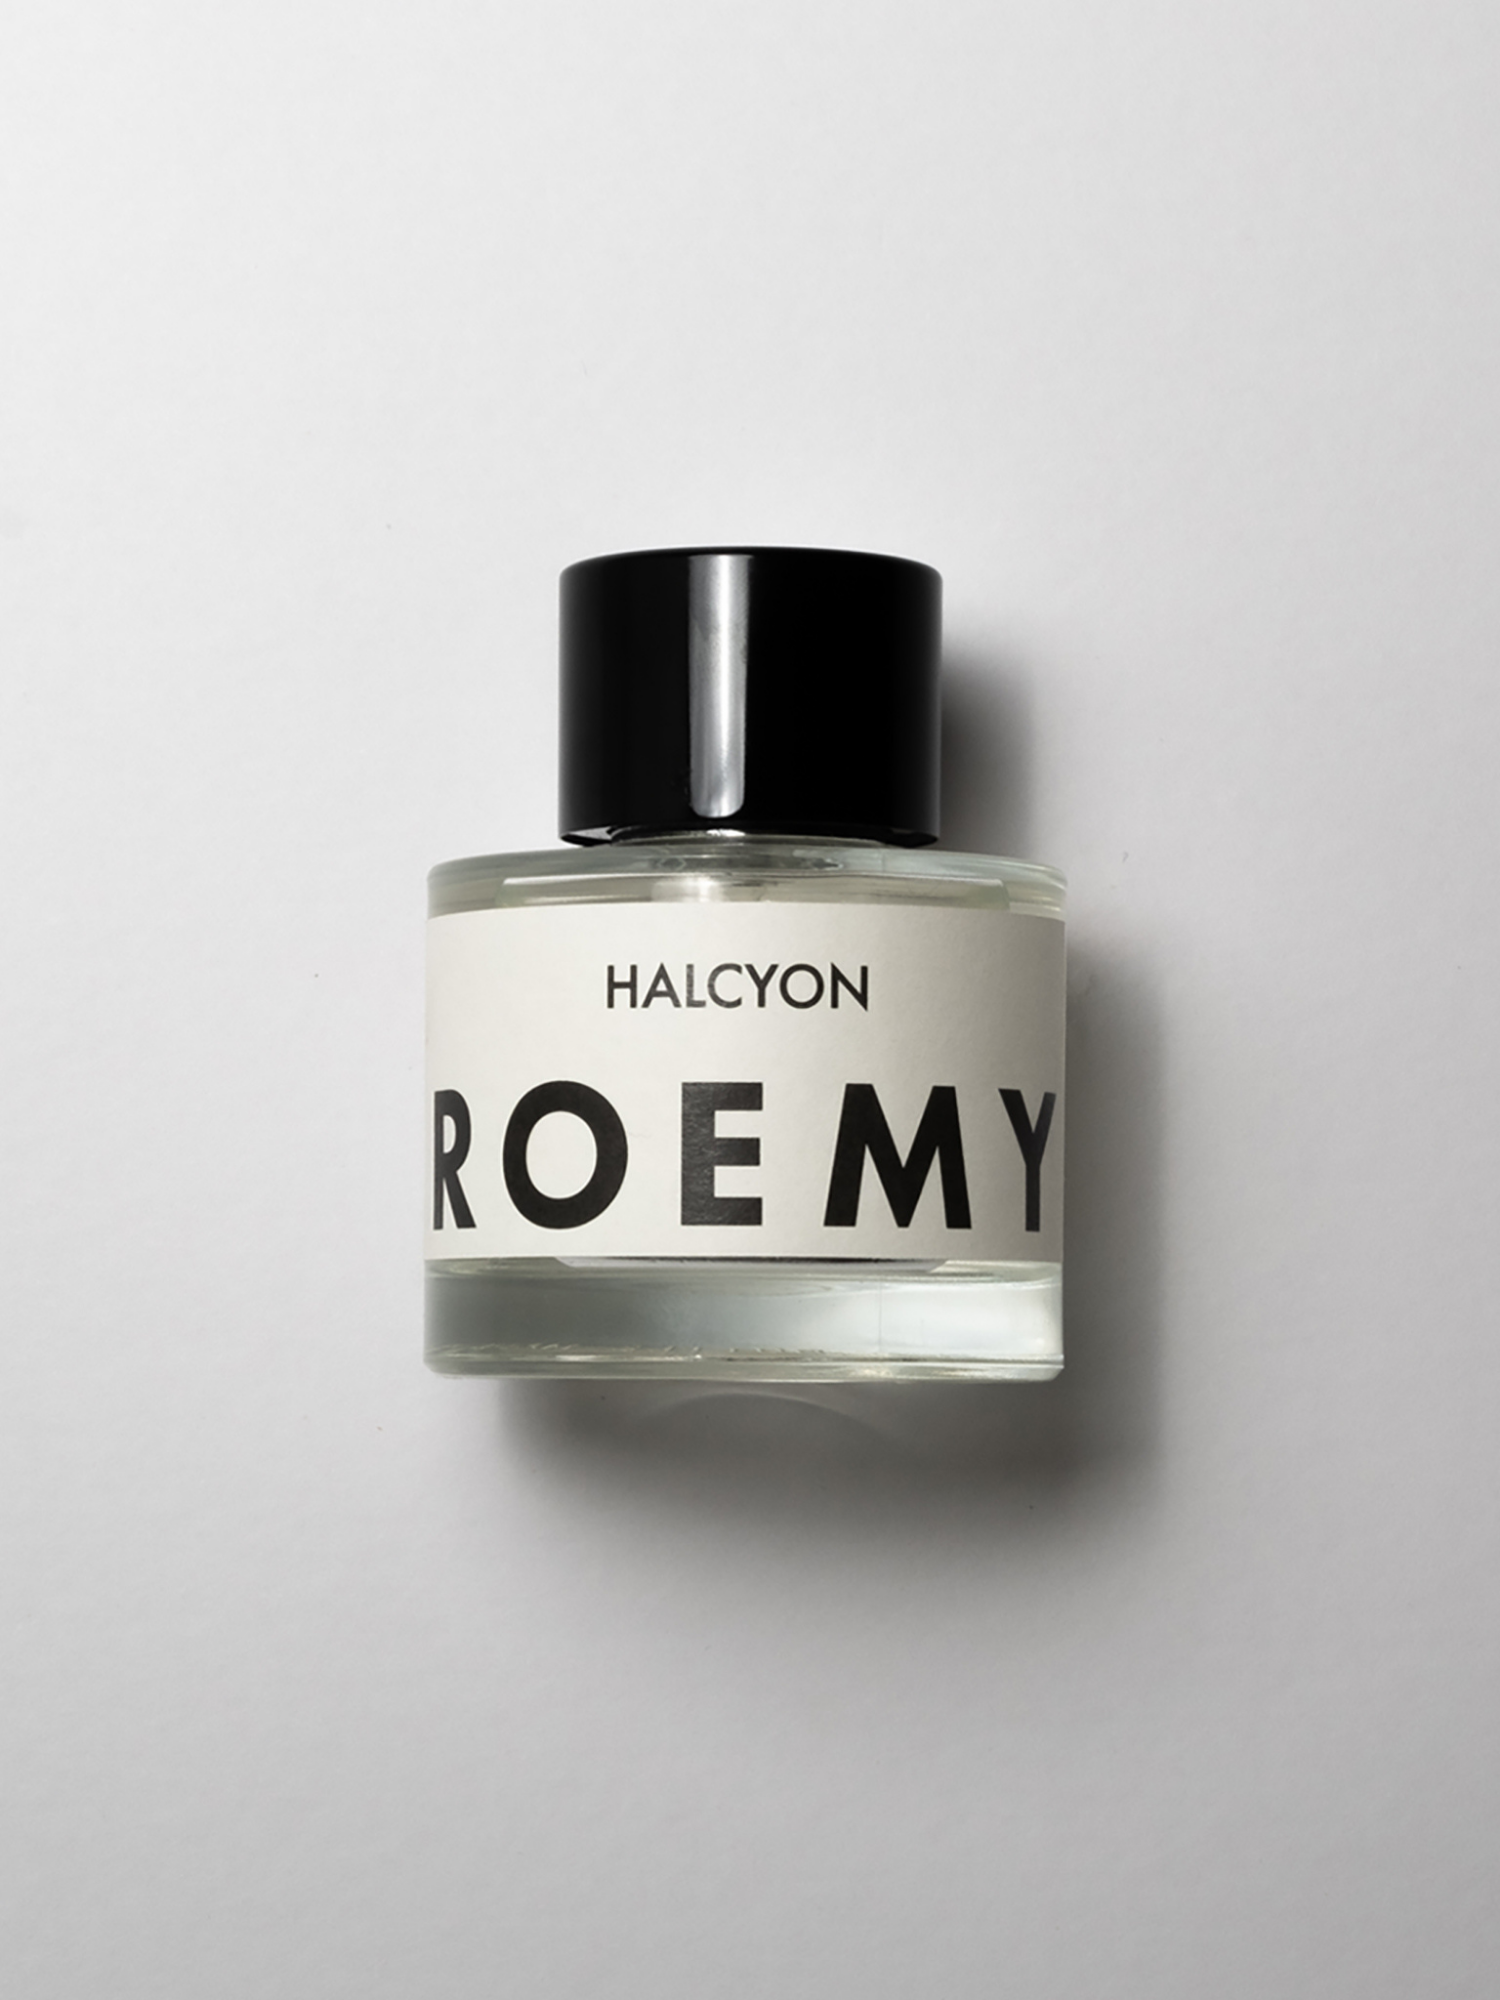 ROEMY - Halcyon